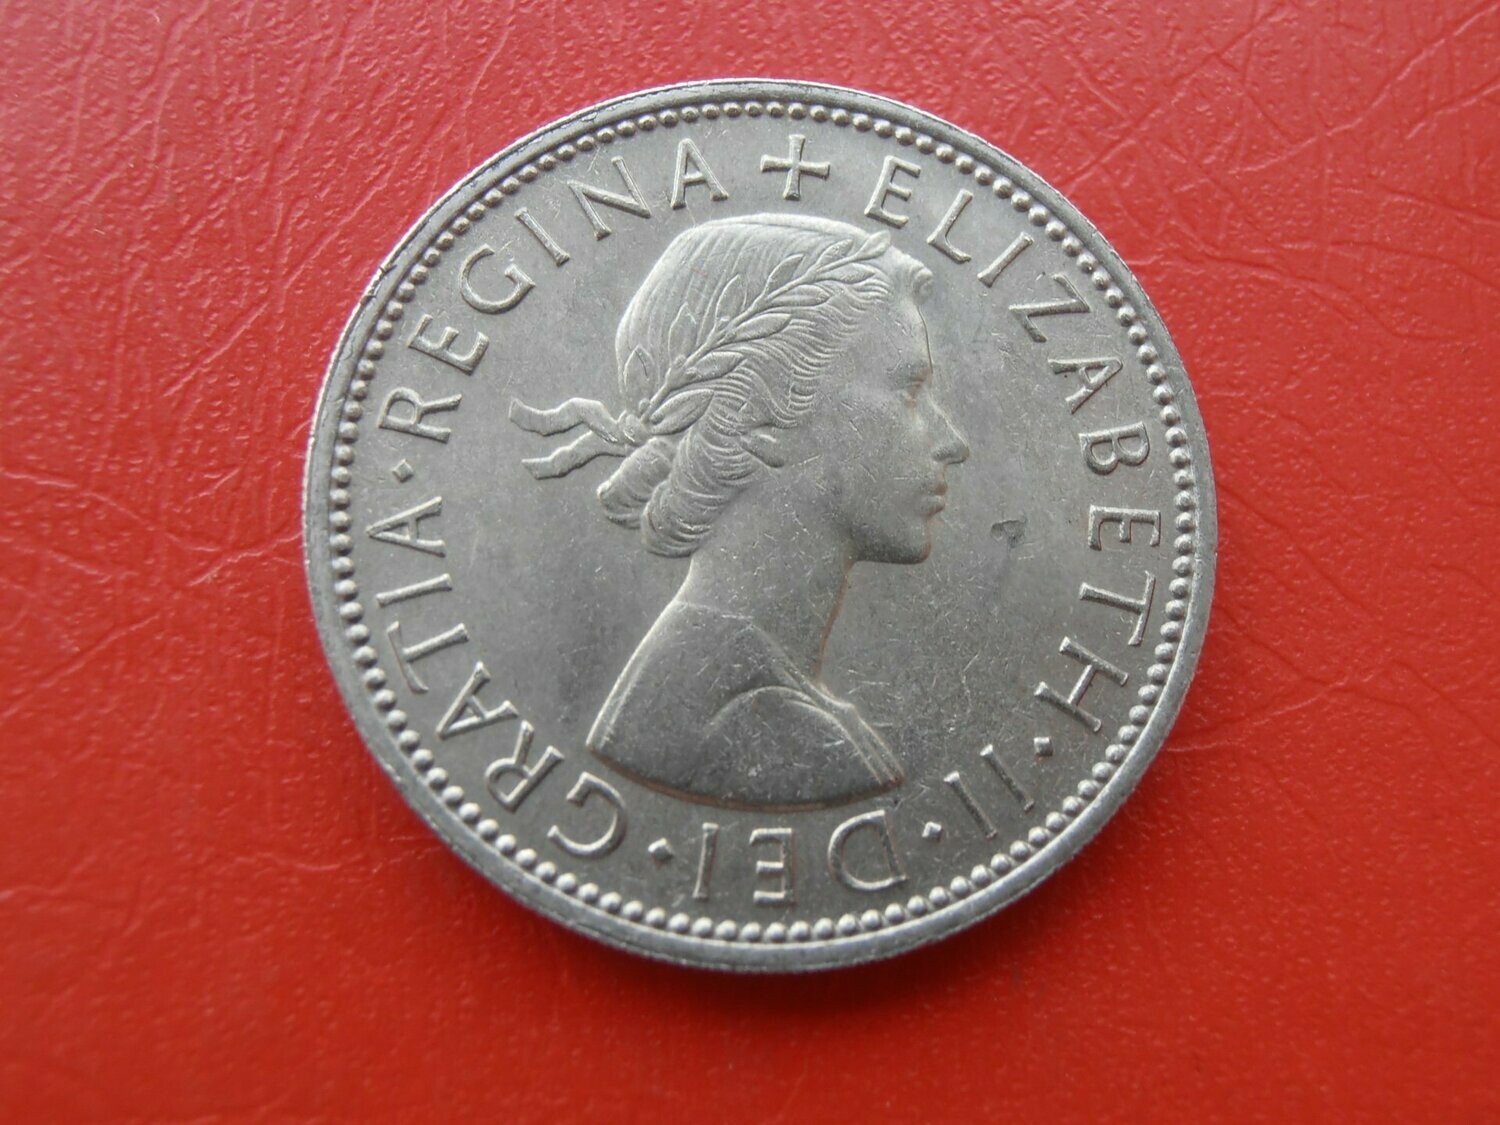 1965 Two Shillings